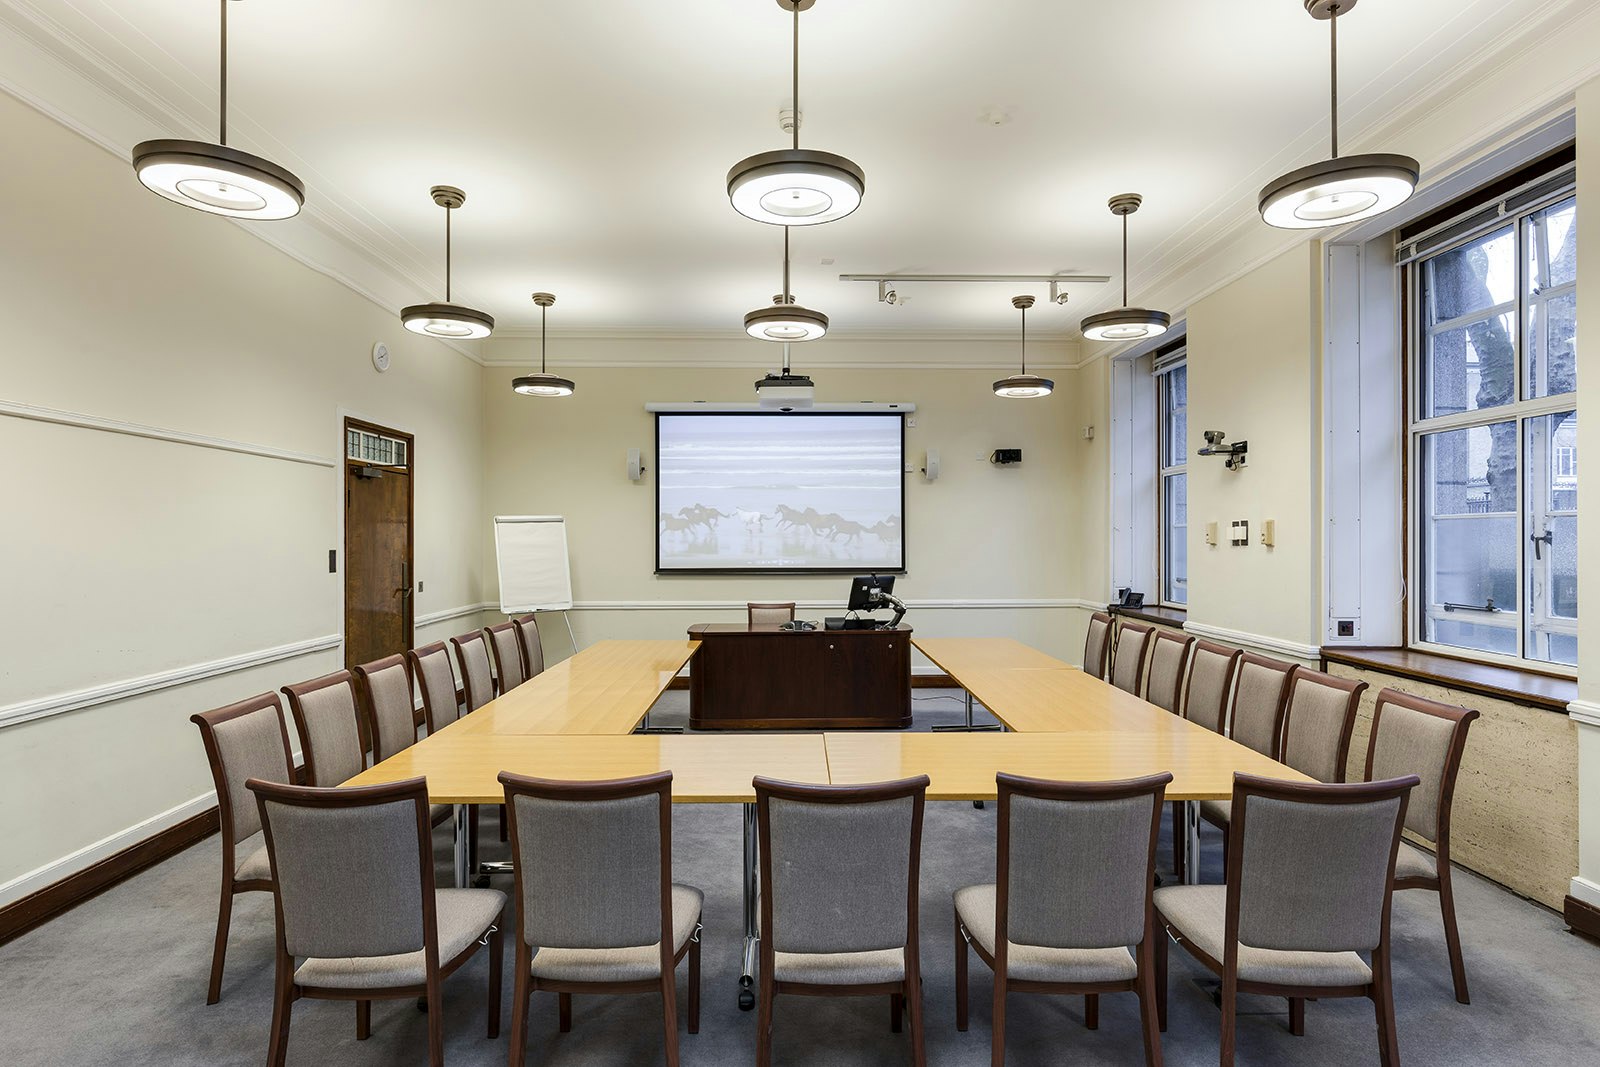 University of London Venues - Meeting Rooms - Breakout Spaces image 1